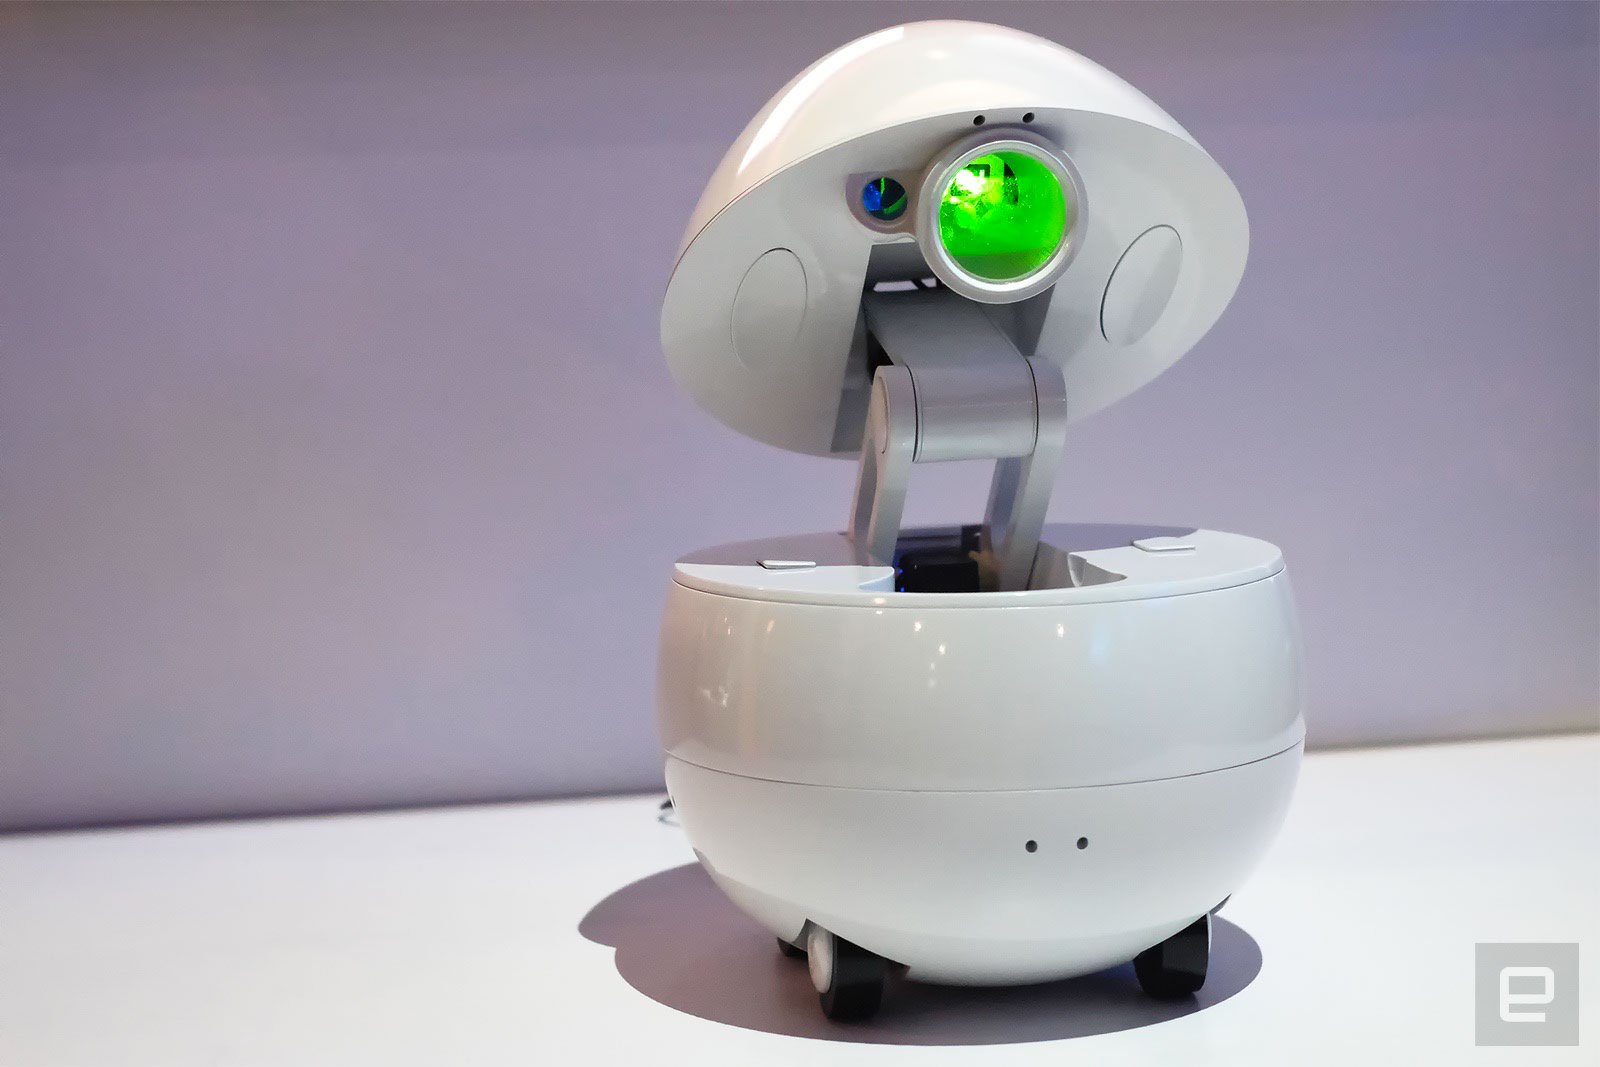 Panasonic's companion robot